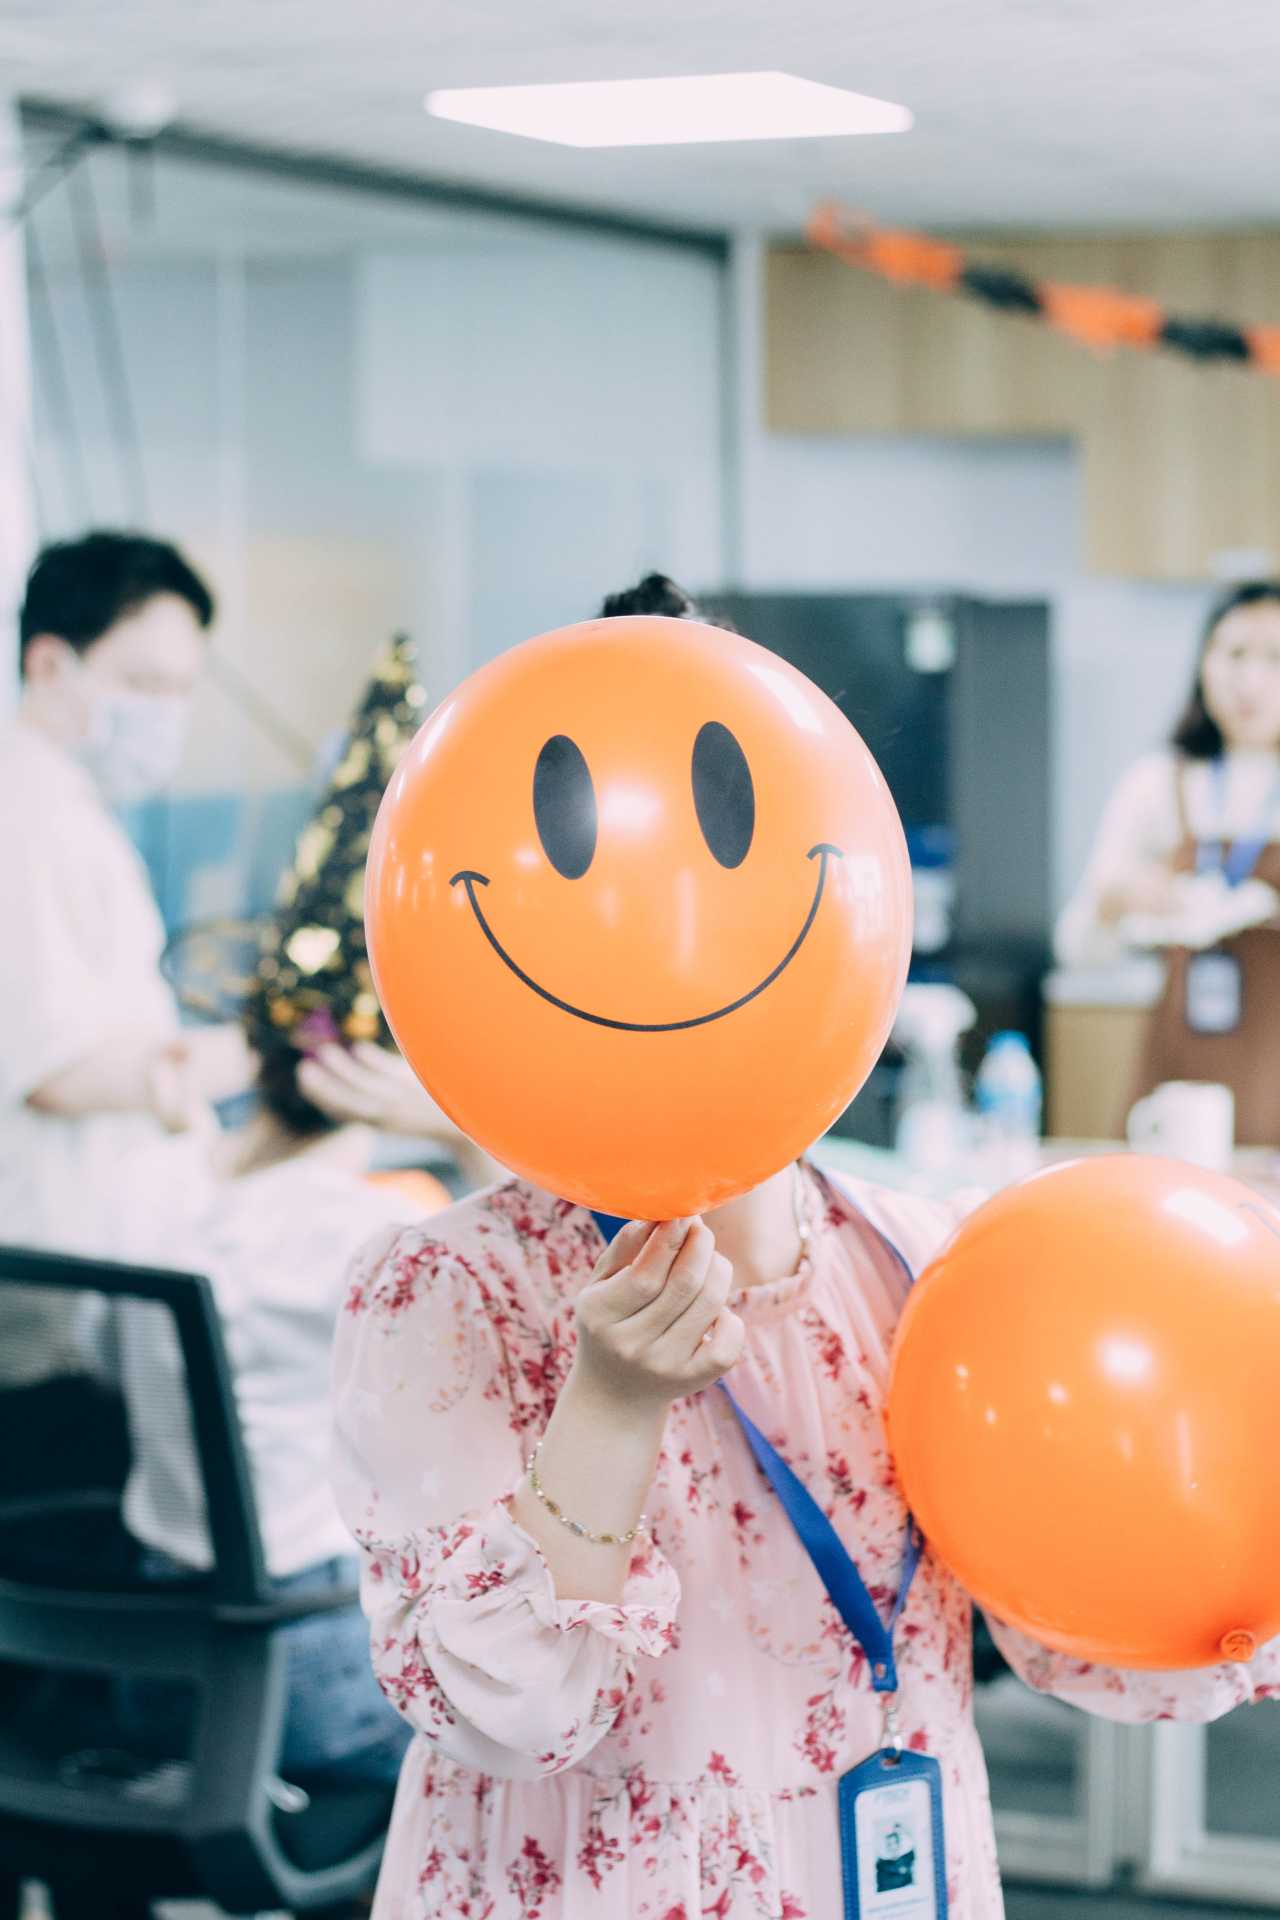 empleada oficina con globo naranja feliz sonrisa sindrome impostor cara mascara